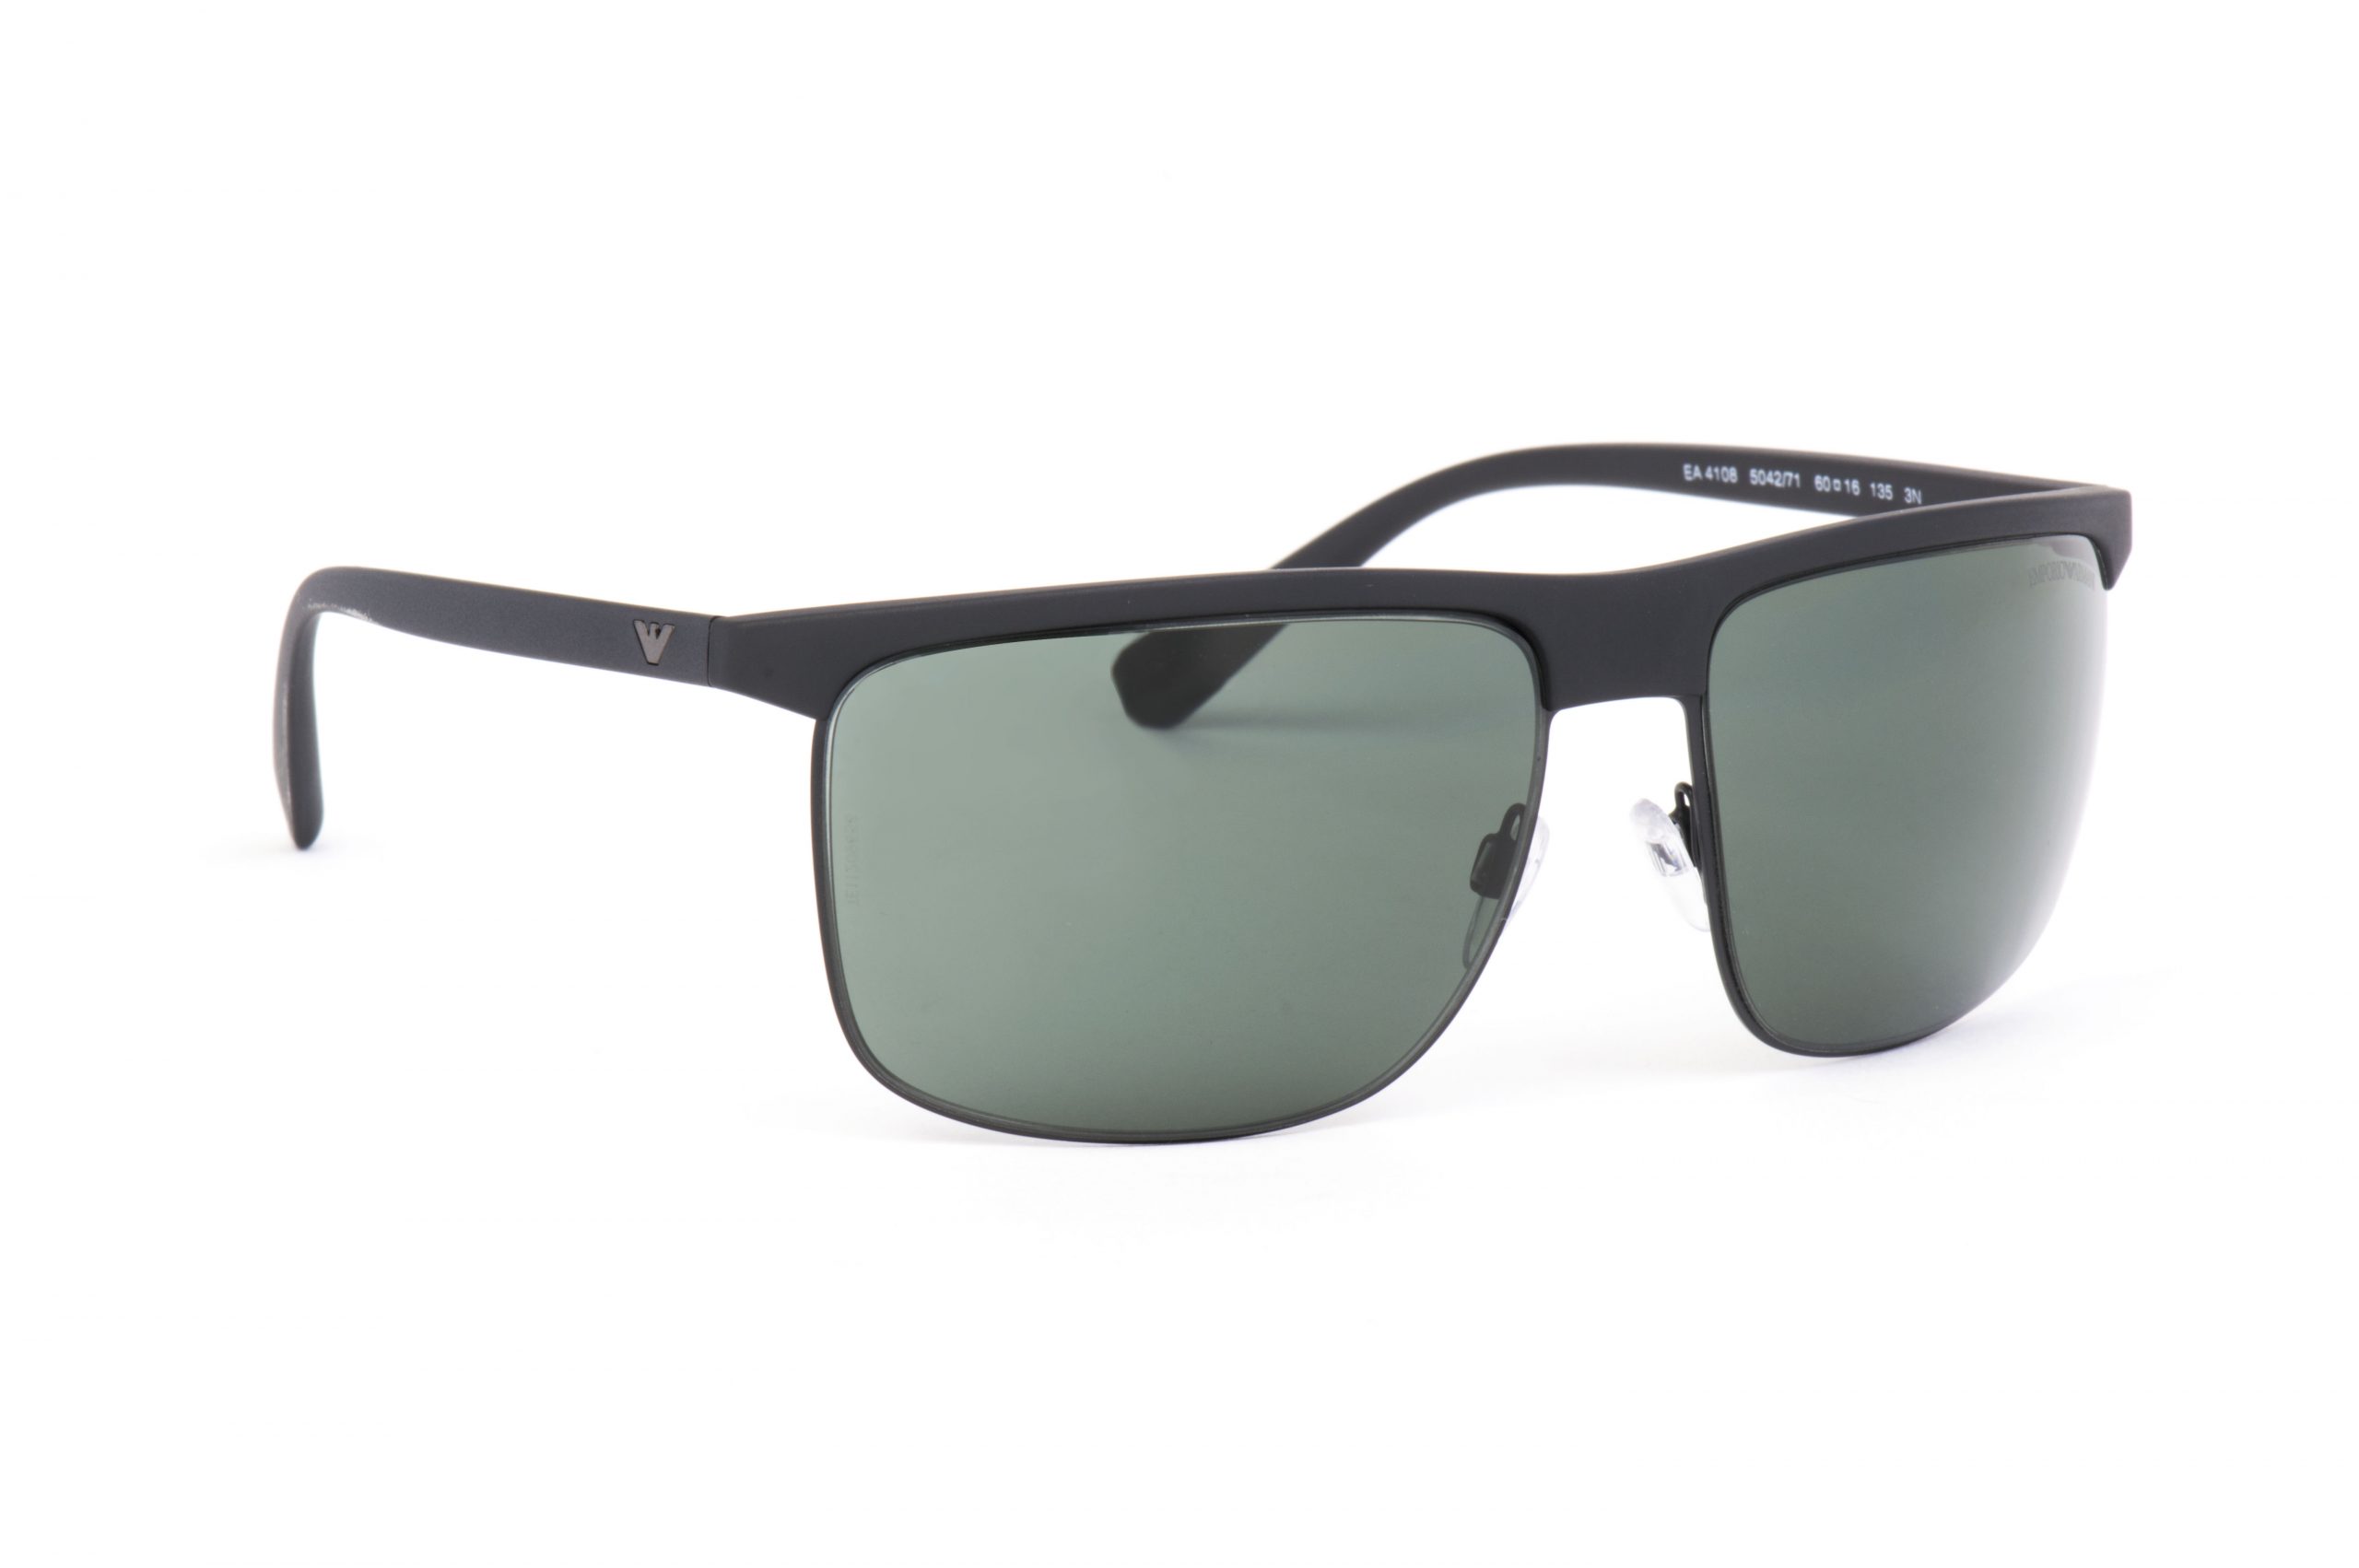 EMPORIO ARMANI Sunglasses EA 4108 5042/71 Green | عالم النظارات السعودية